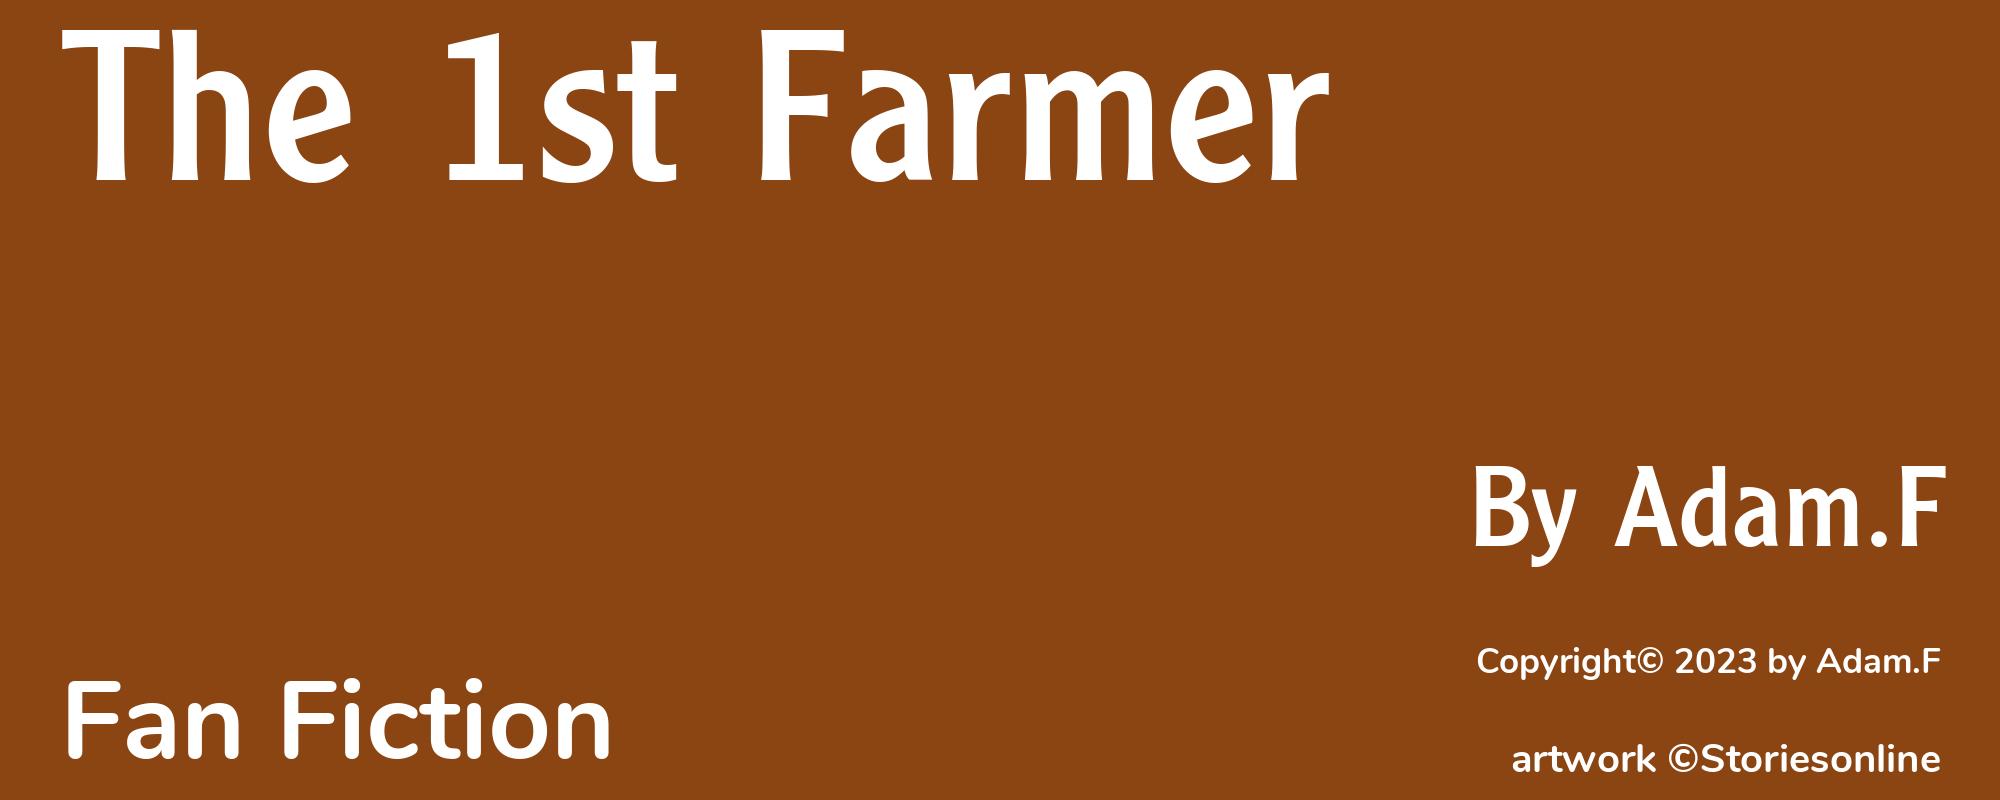 The 1st Farmer - Cover